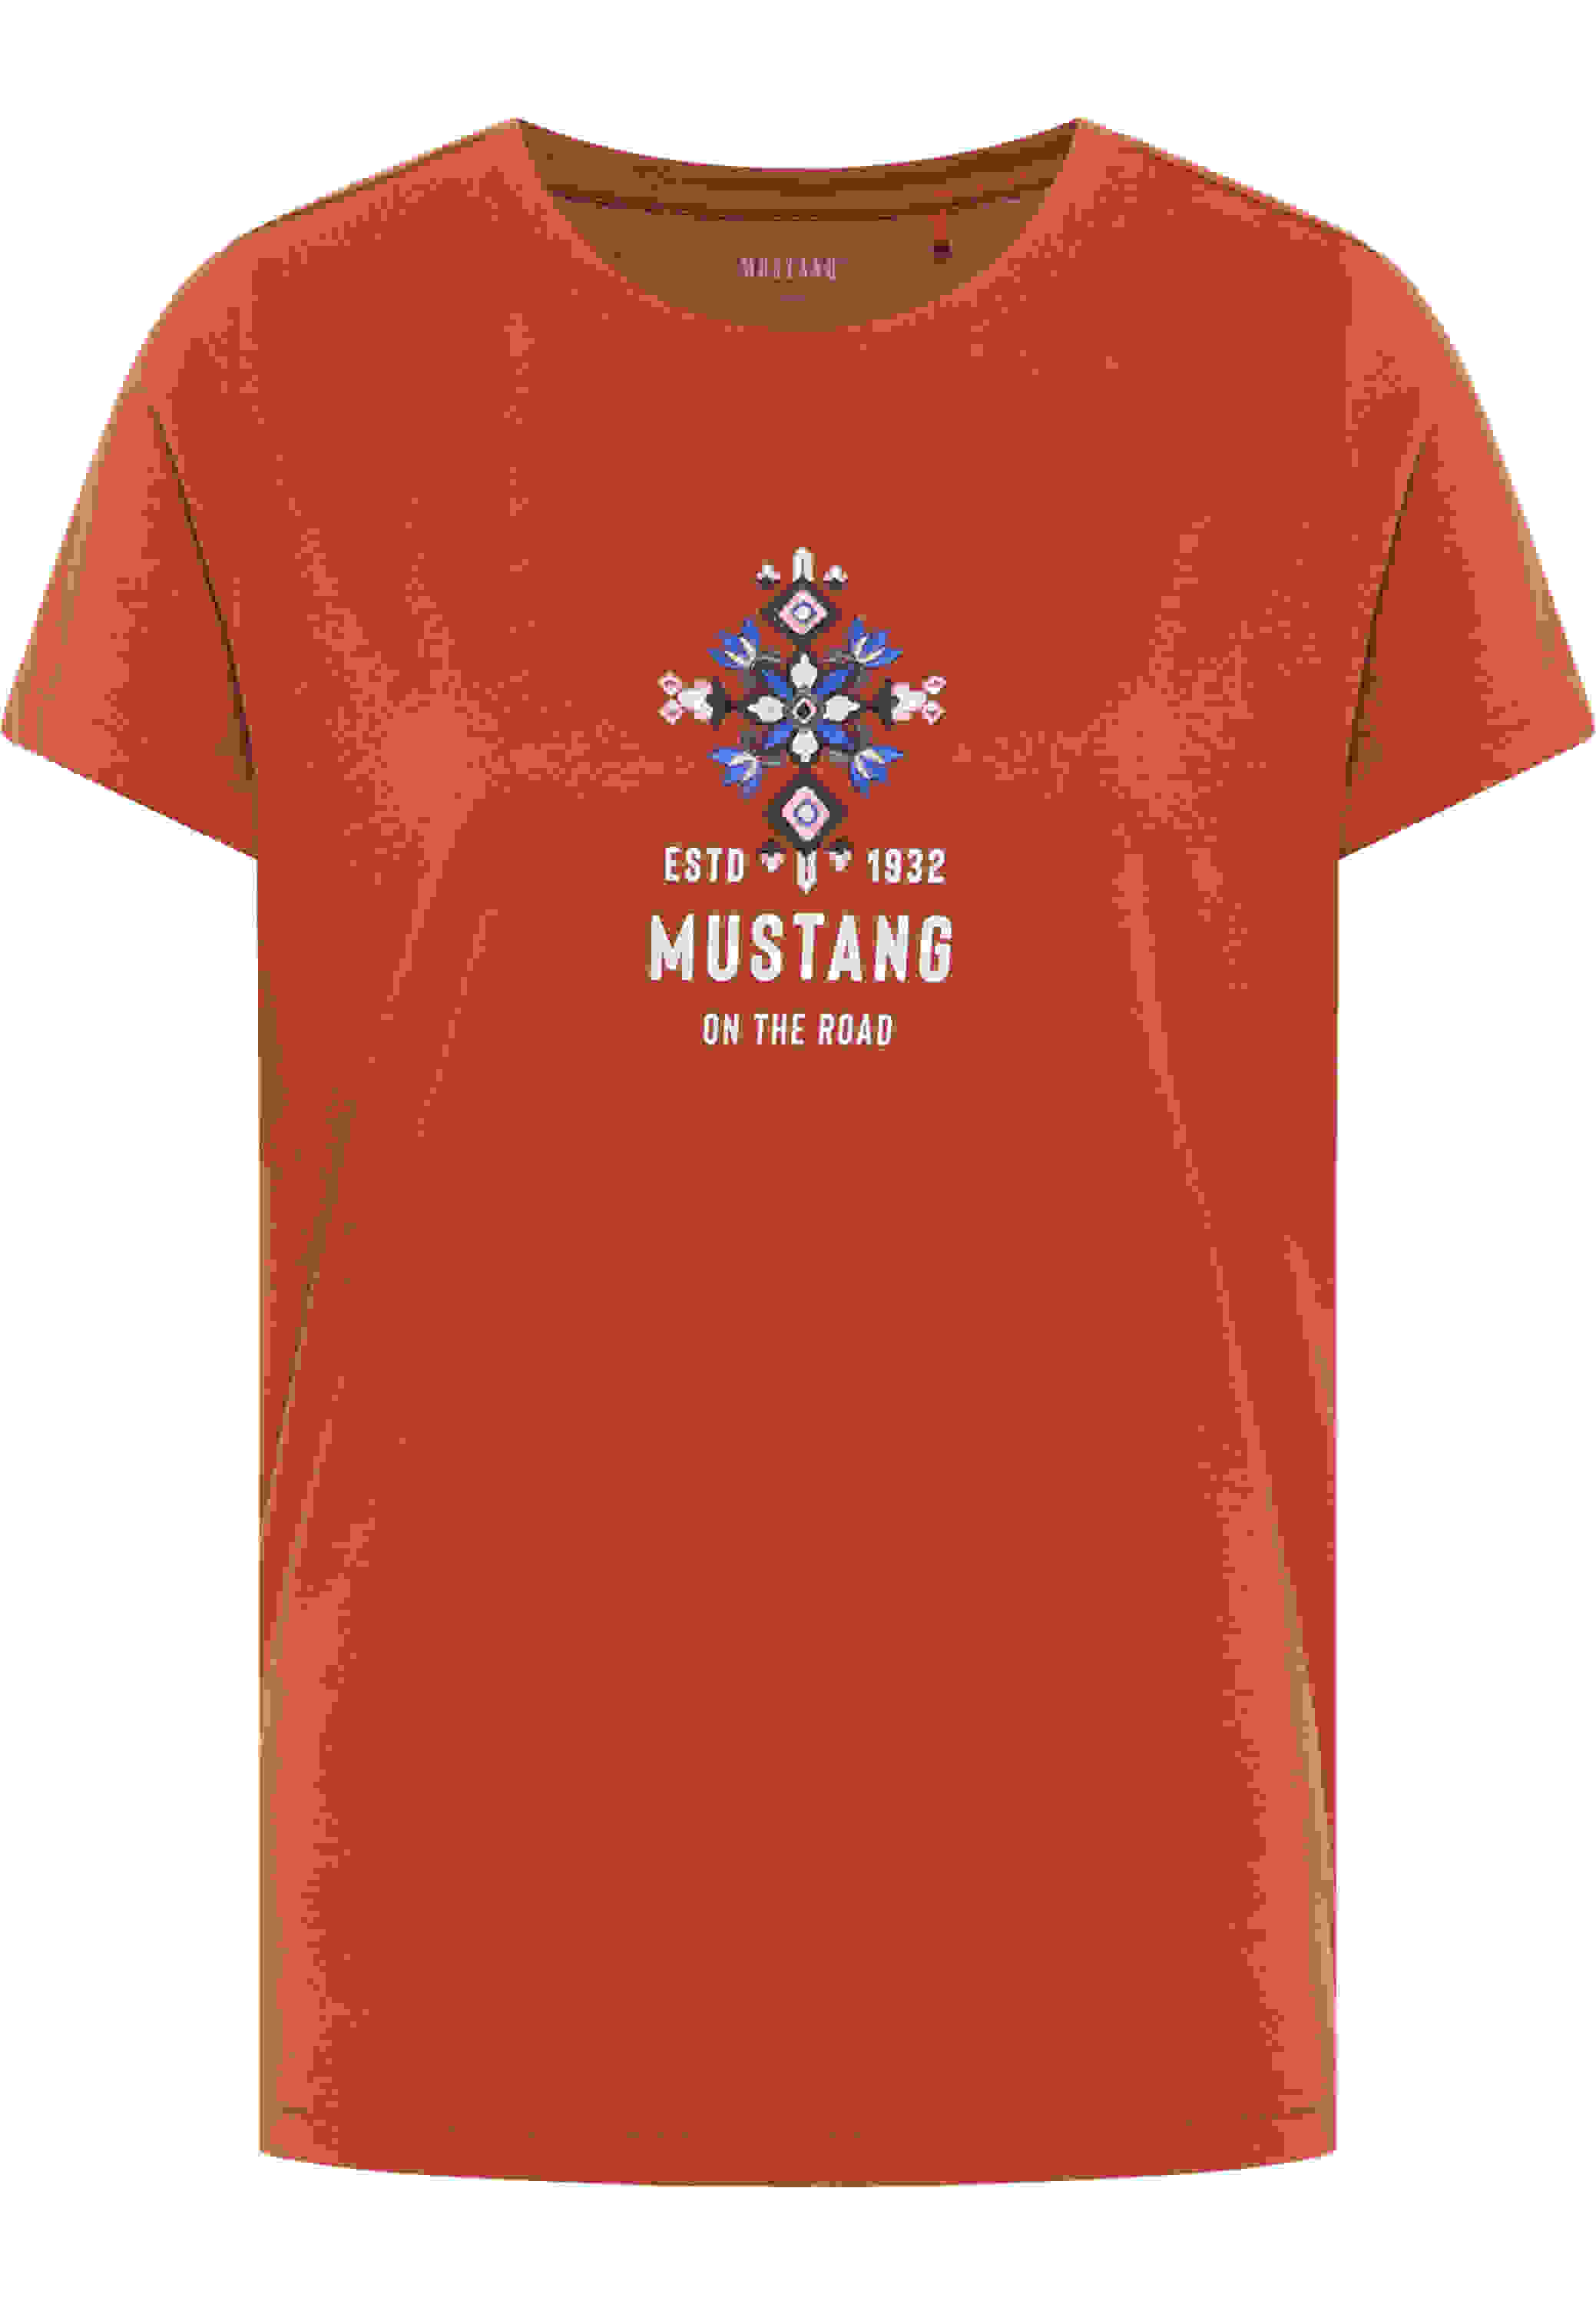 Print-Shirt von Mustang jetzt bei bei Mustang kaufen